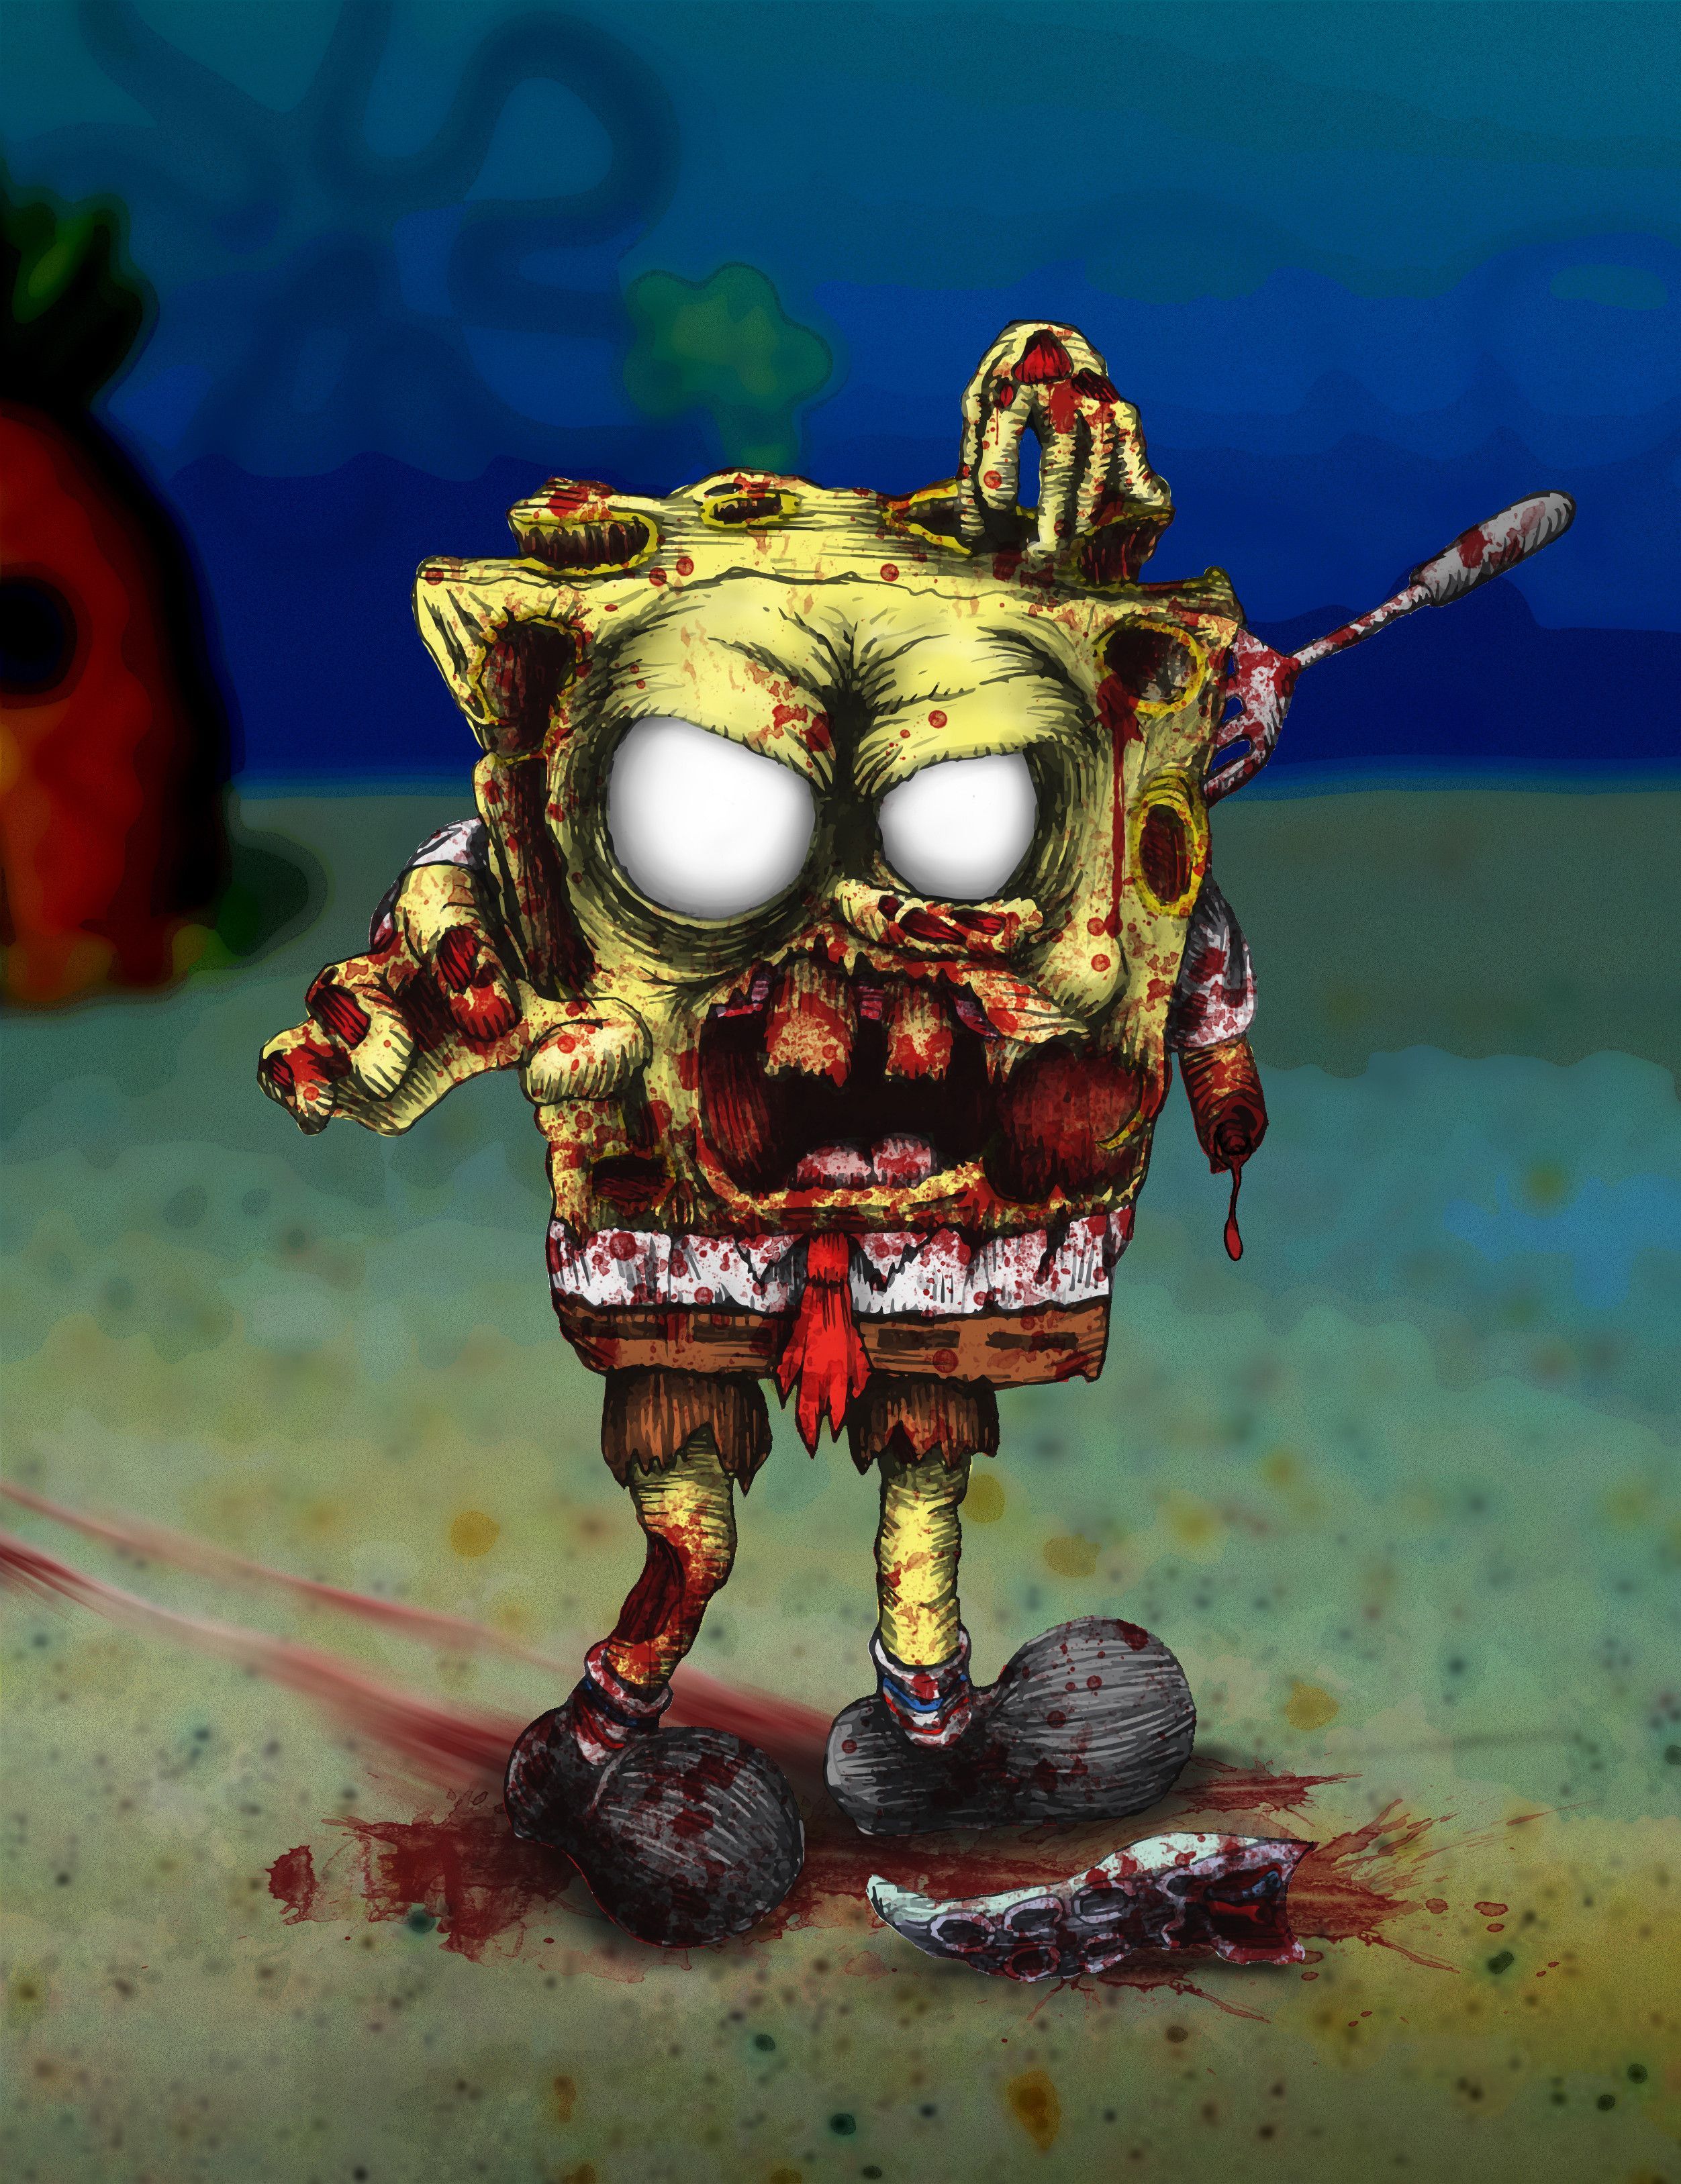 Scary Spongebob Pictures Wallpapers